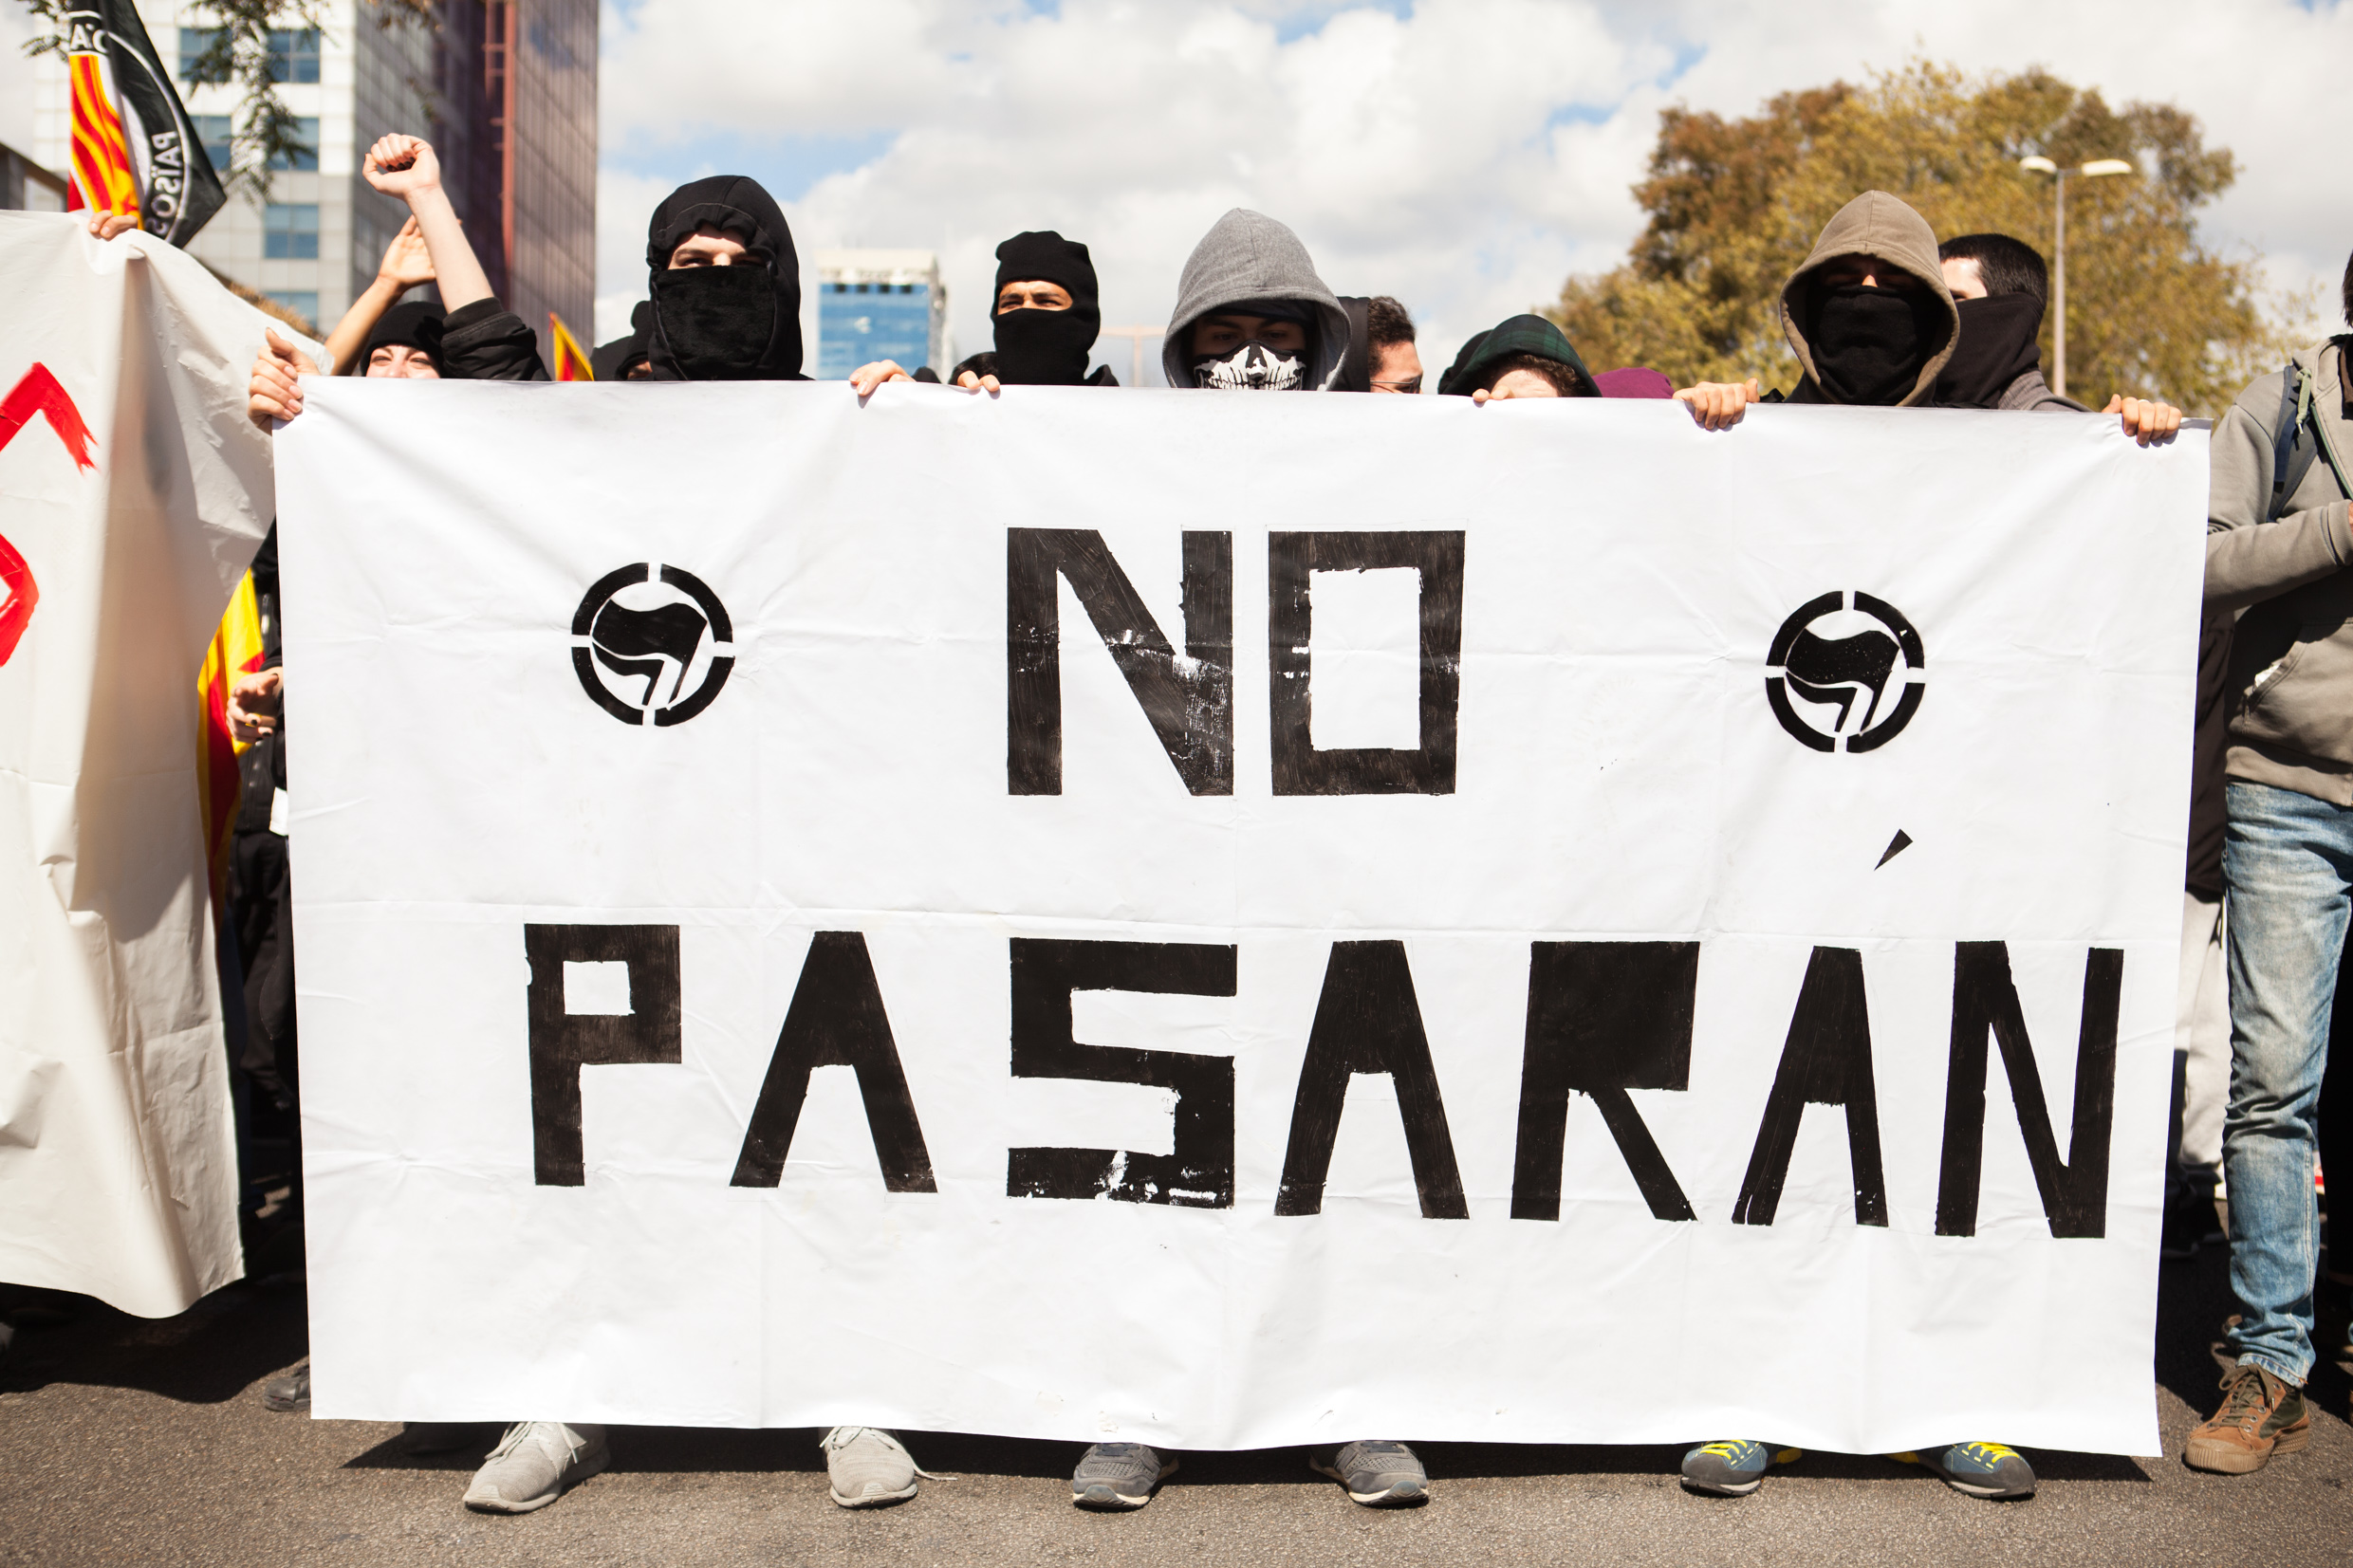 Antifascist group against  VOX demostration. Barcelona